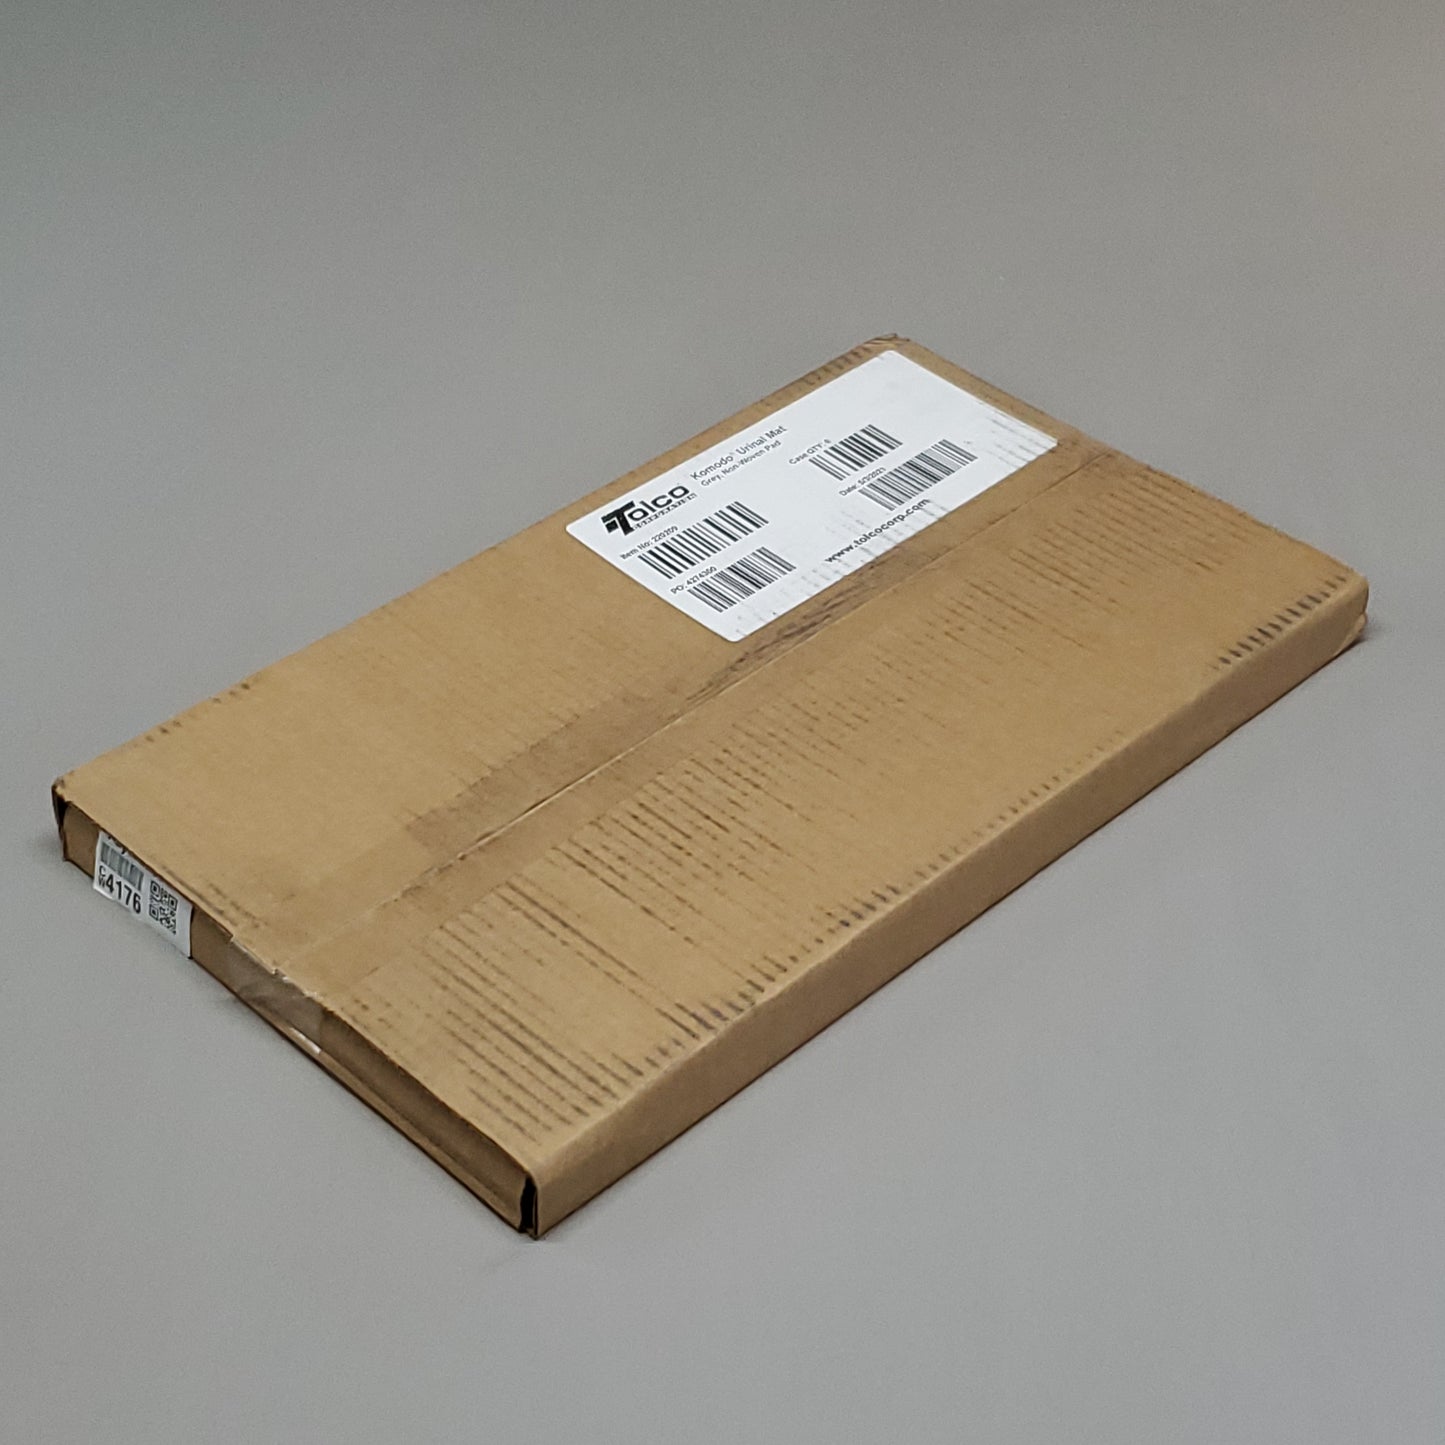 TOLCO Komodo Urinal Mat Polyester Odor Control 6-Pack Black/Grey 220209 (new)